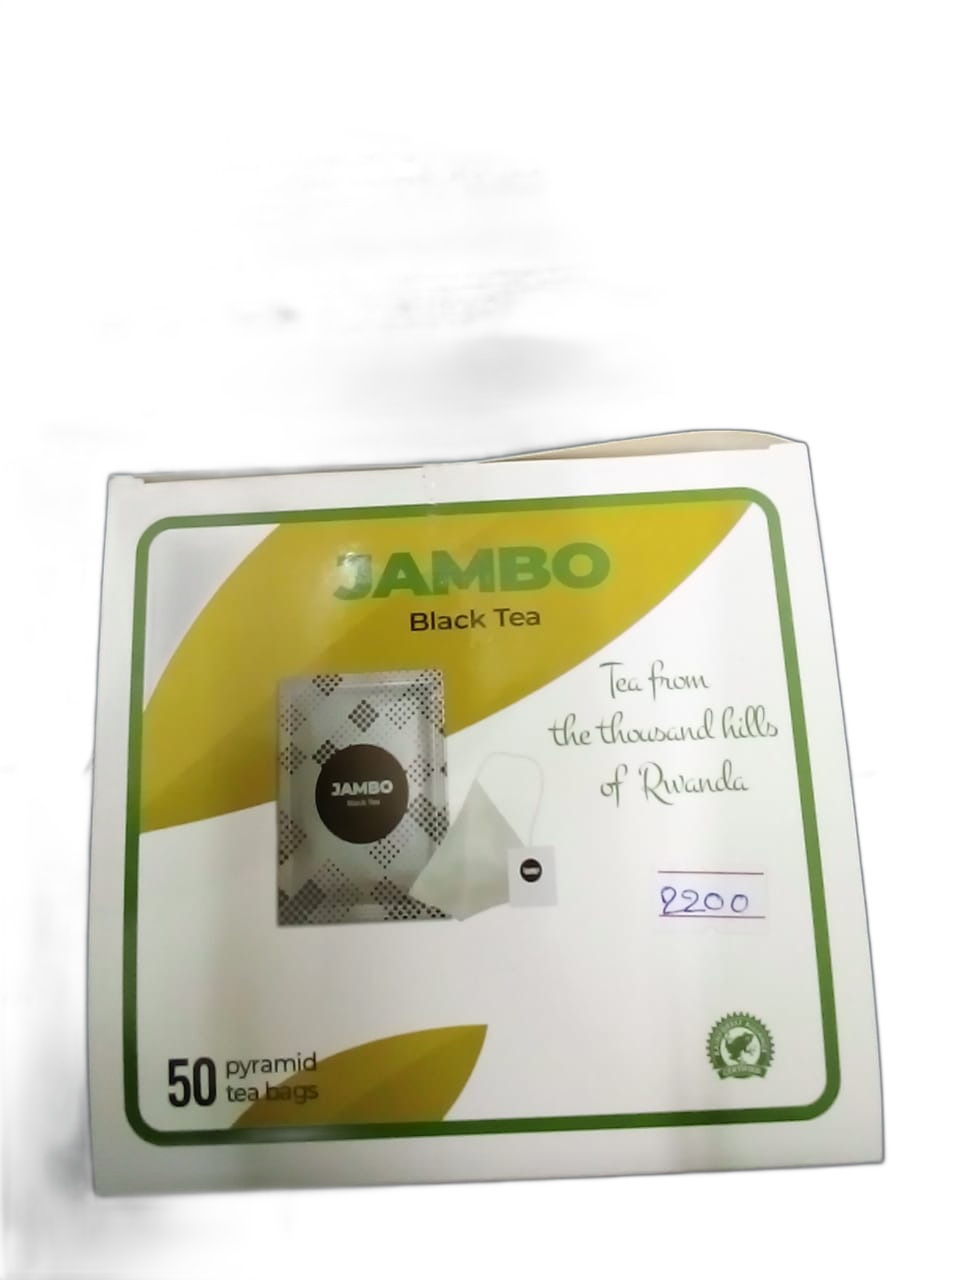 Jambo Black Tea, 50 Pyramind tea bags